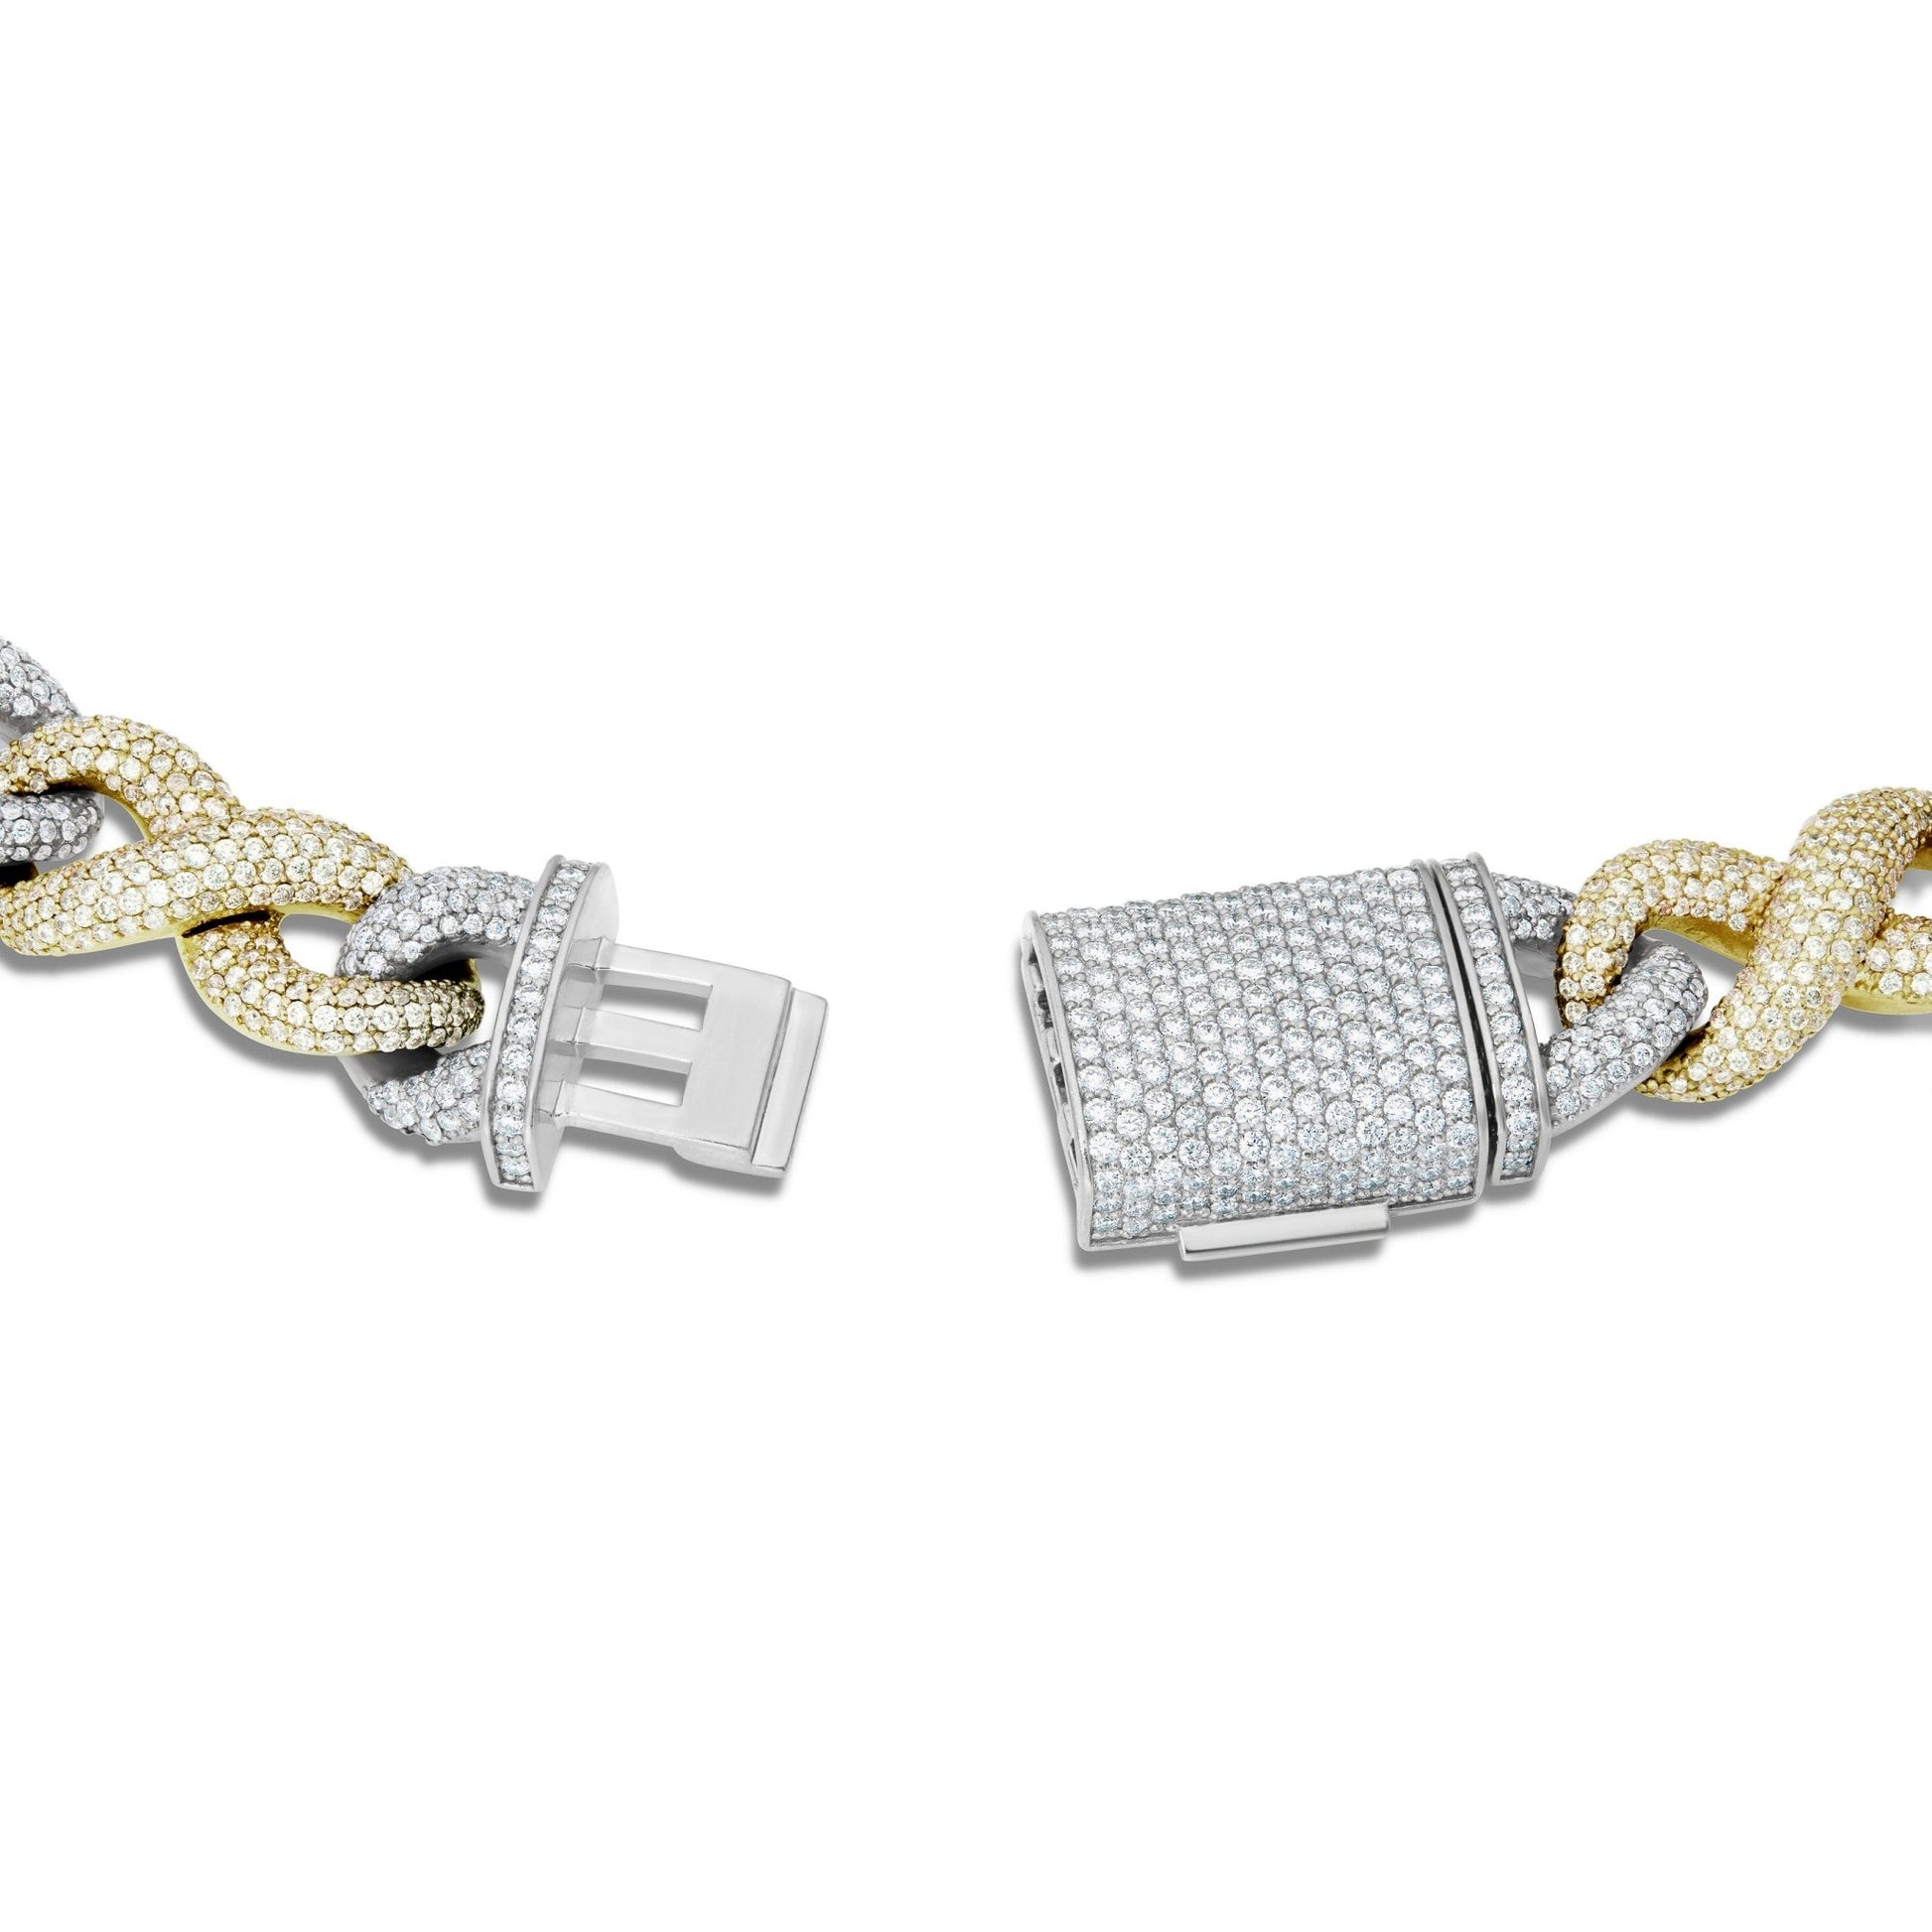 Two-tone Prong set Diamond Infinity Cuban Chain, 14.5 mm - Shyne Jewelers Yellow & White Gold 16" Shyne Jewelers